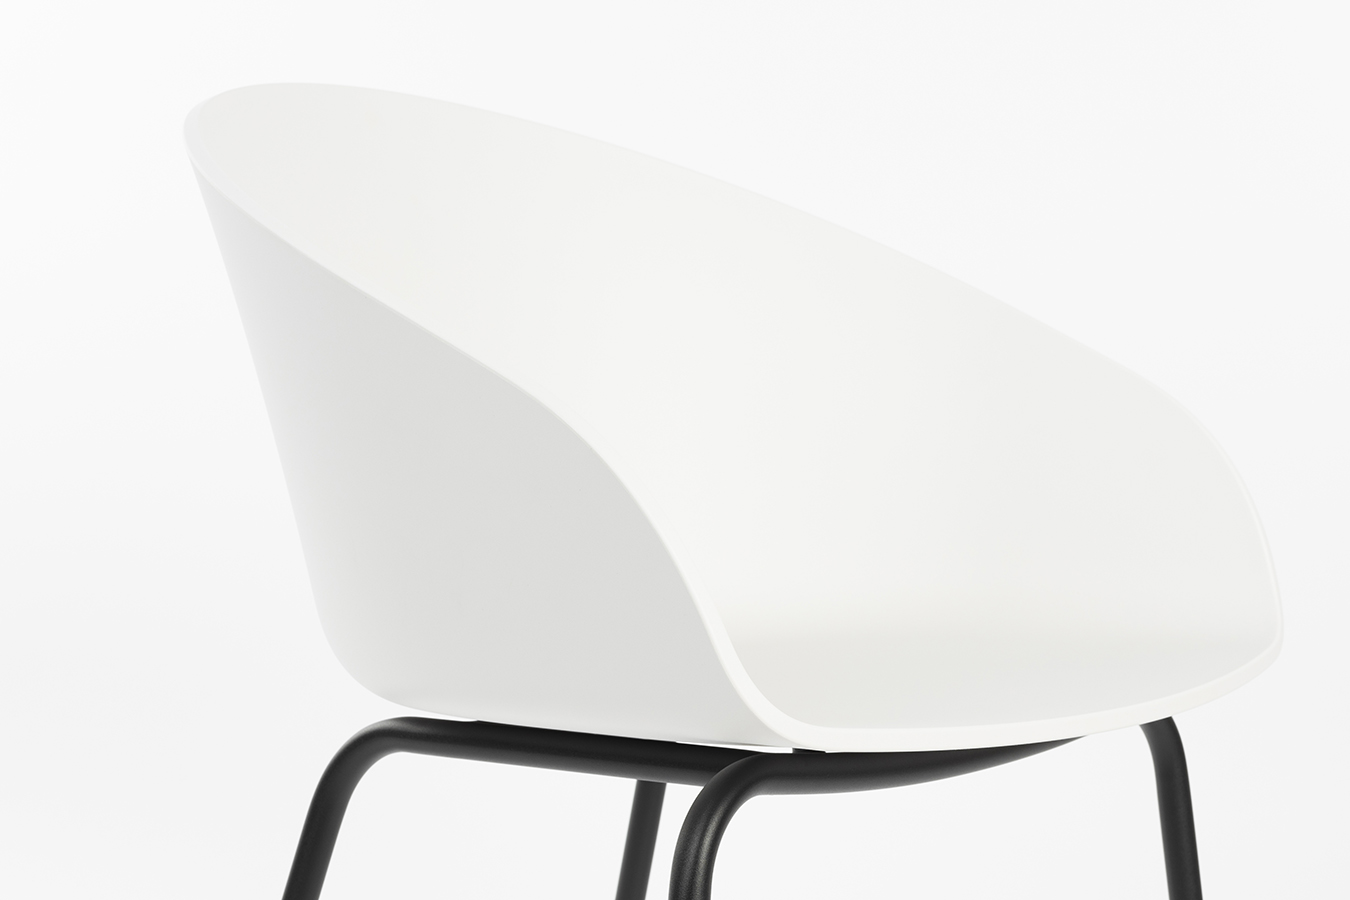 Zuiver Void dizajnová stolička 2